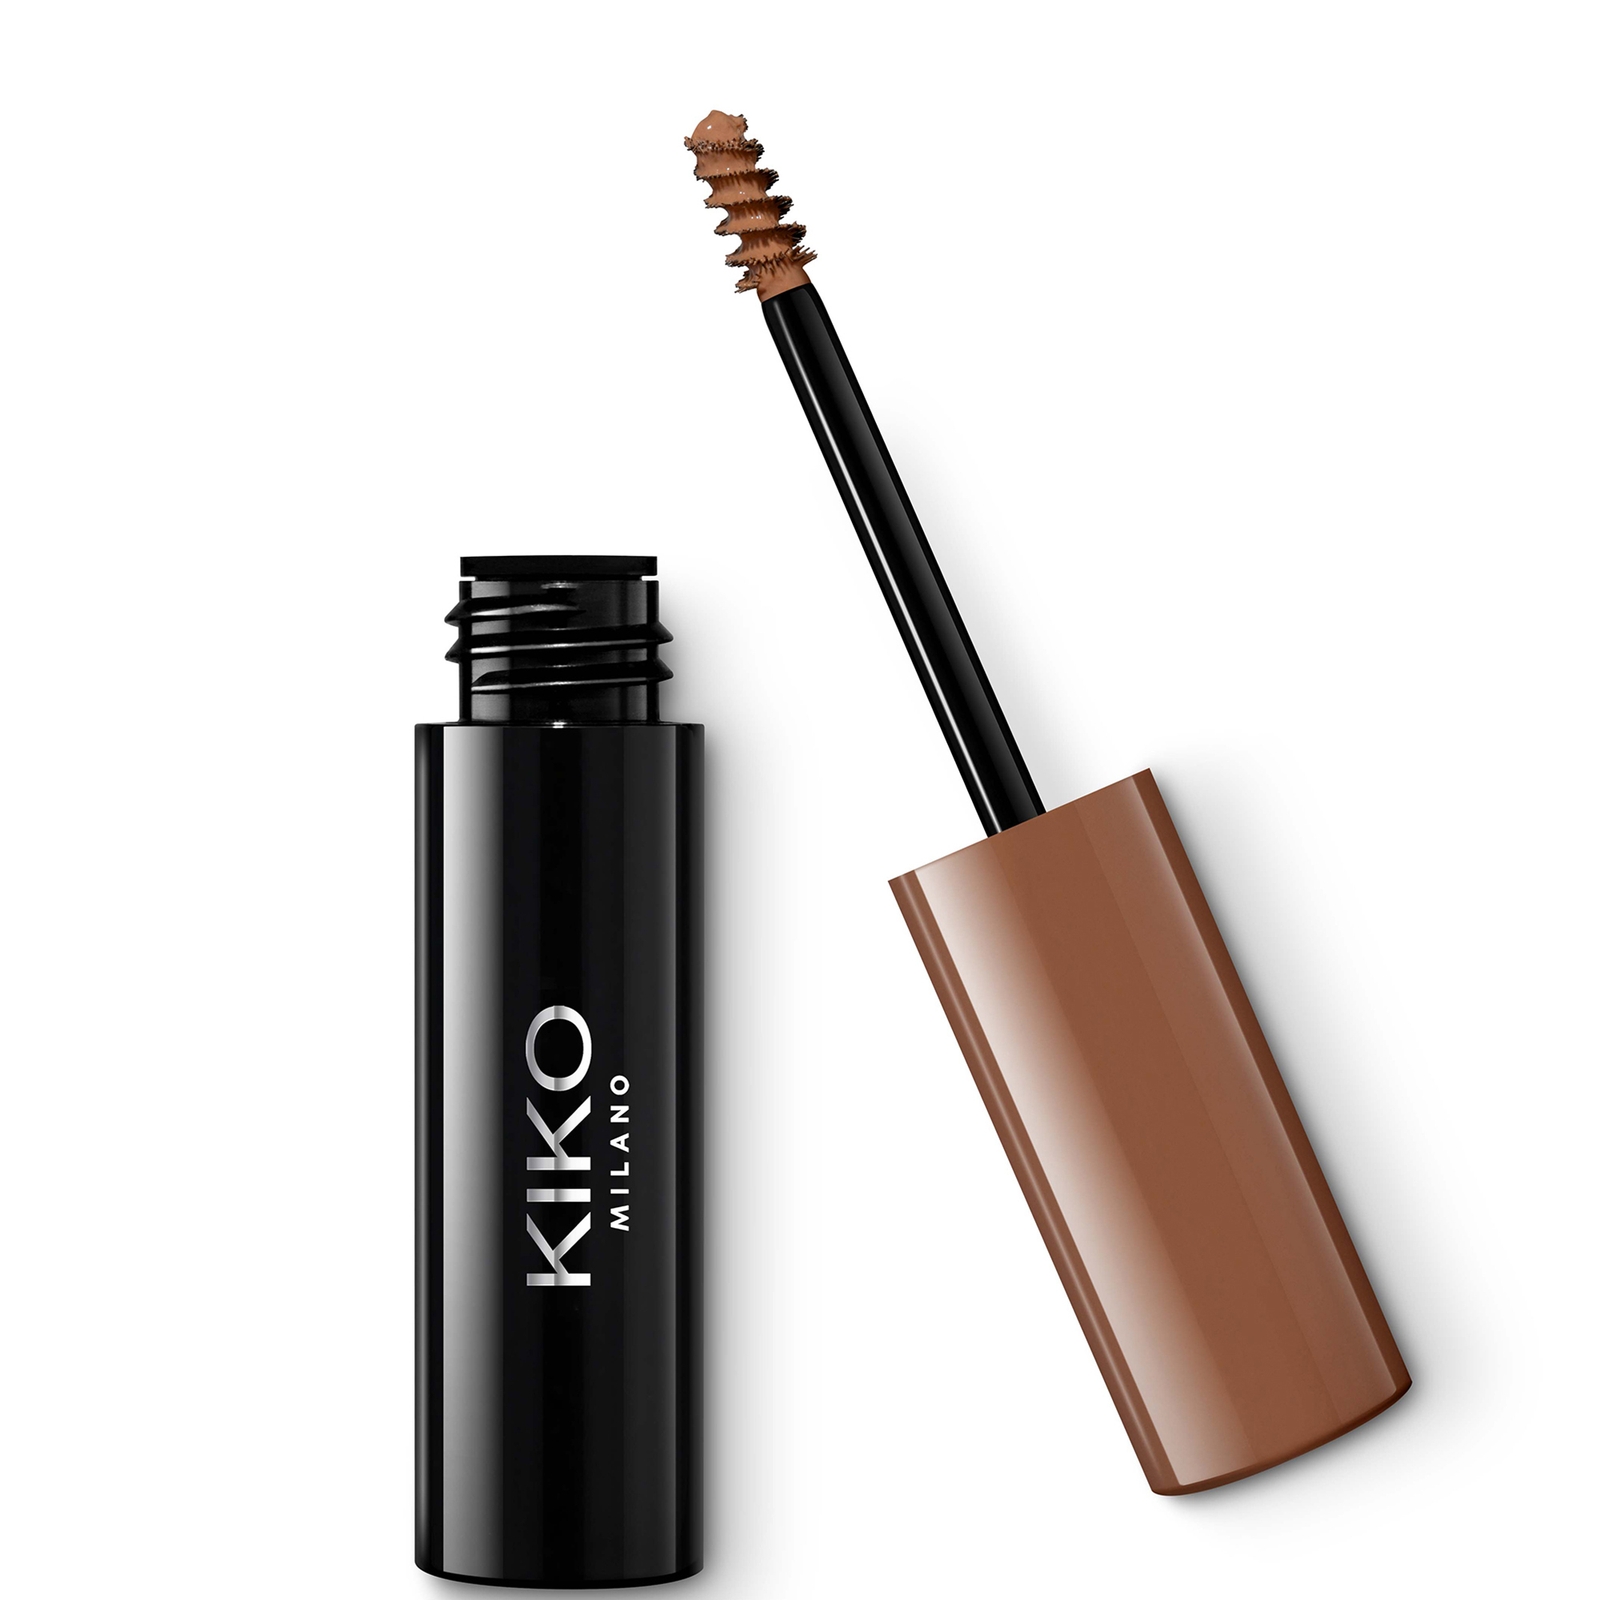 Image of KIKO Milano Eyebrow Fibers Coloured Mascara 4.2ml (Various Shades) - 03 Brunette